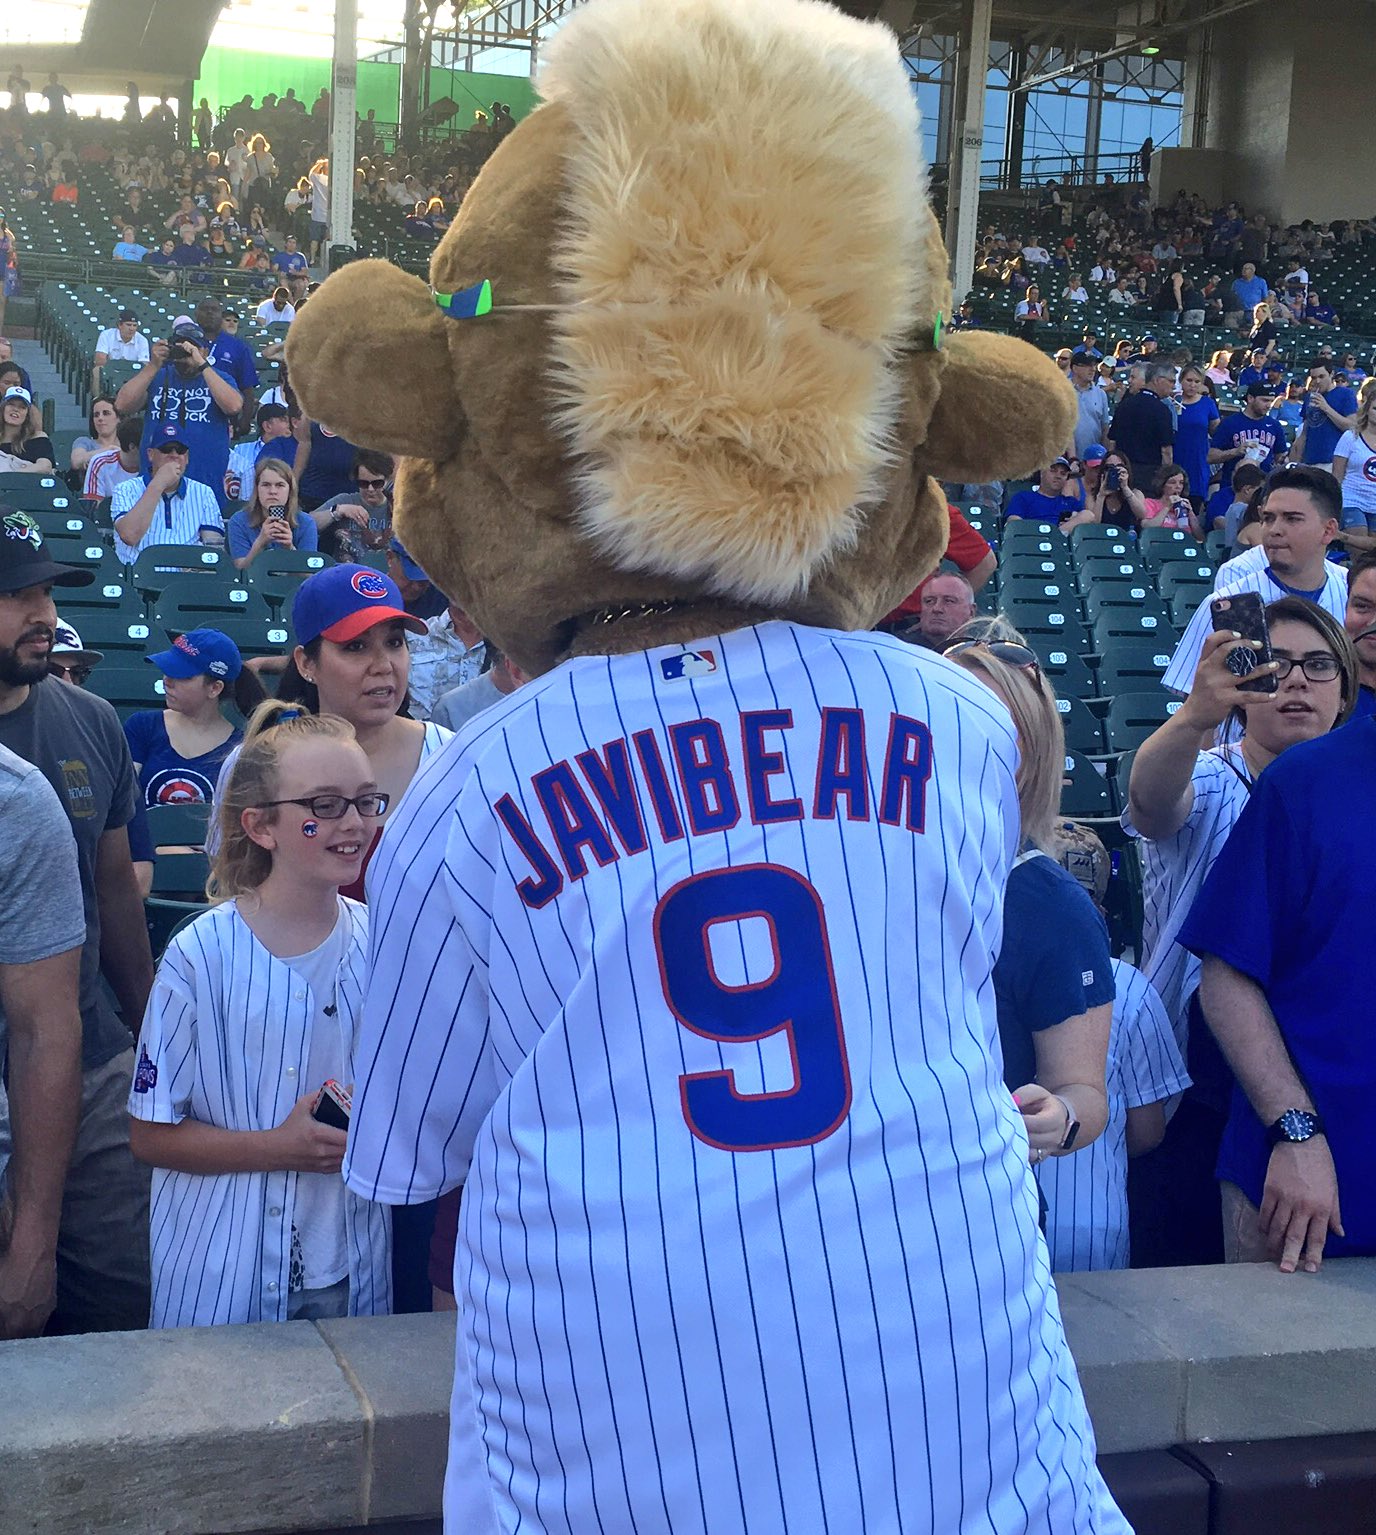 Clark the Cub on X: Batting second for your Chicago Cubs, #JaviBEAR Baez!  🐻9️⃣  / X